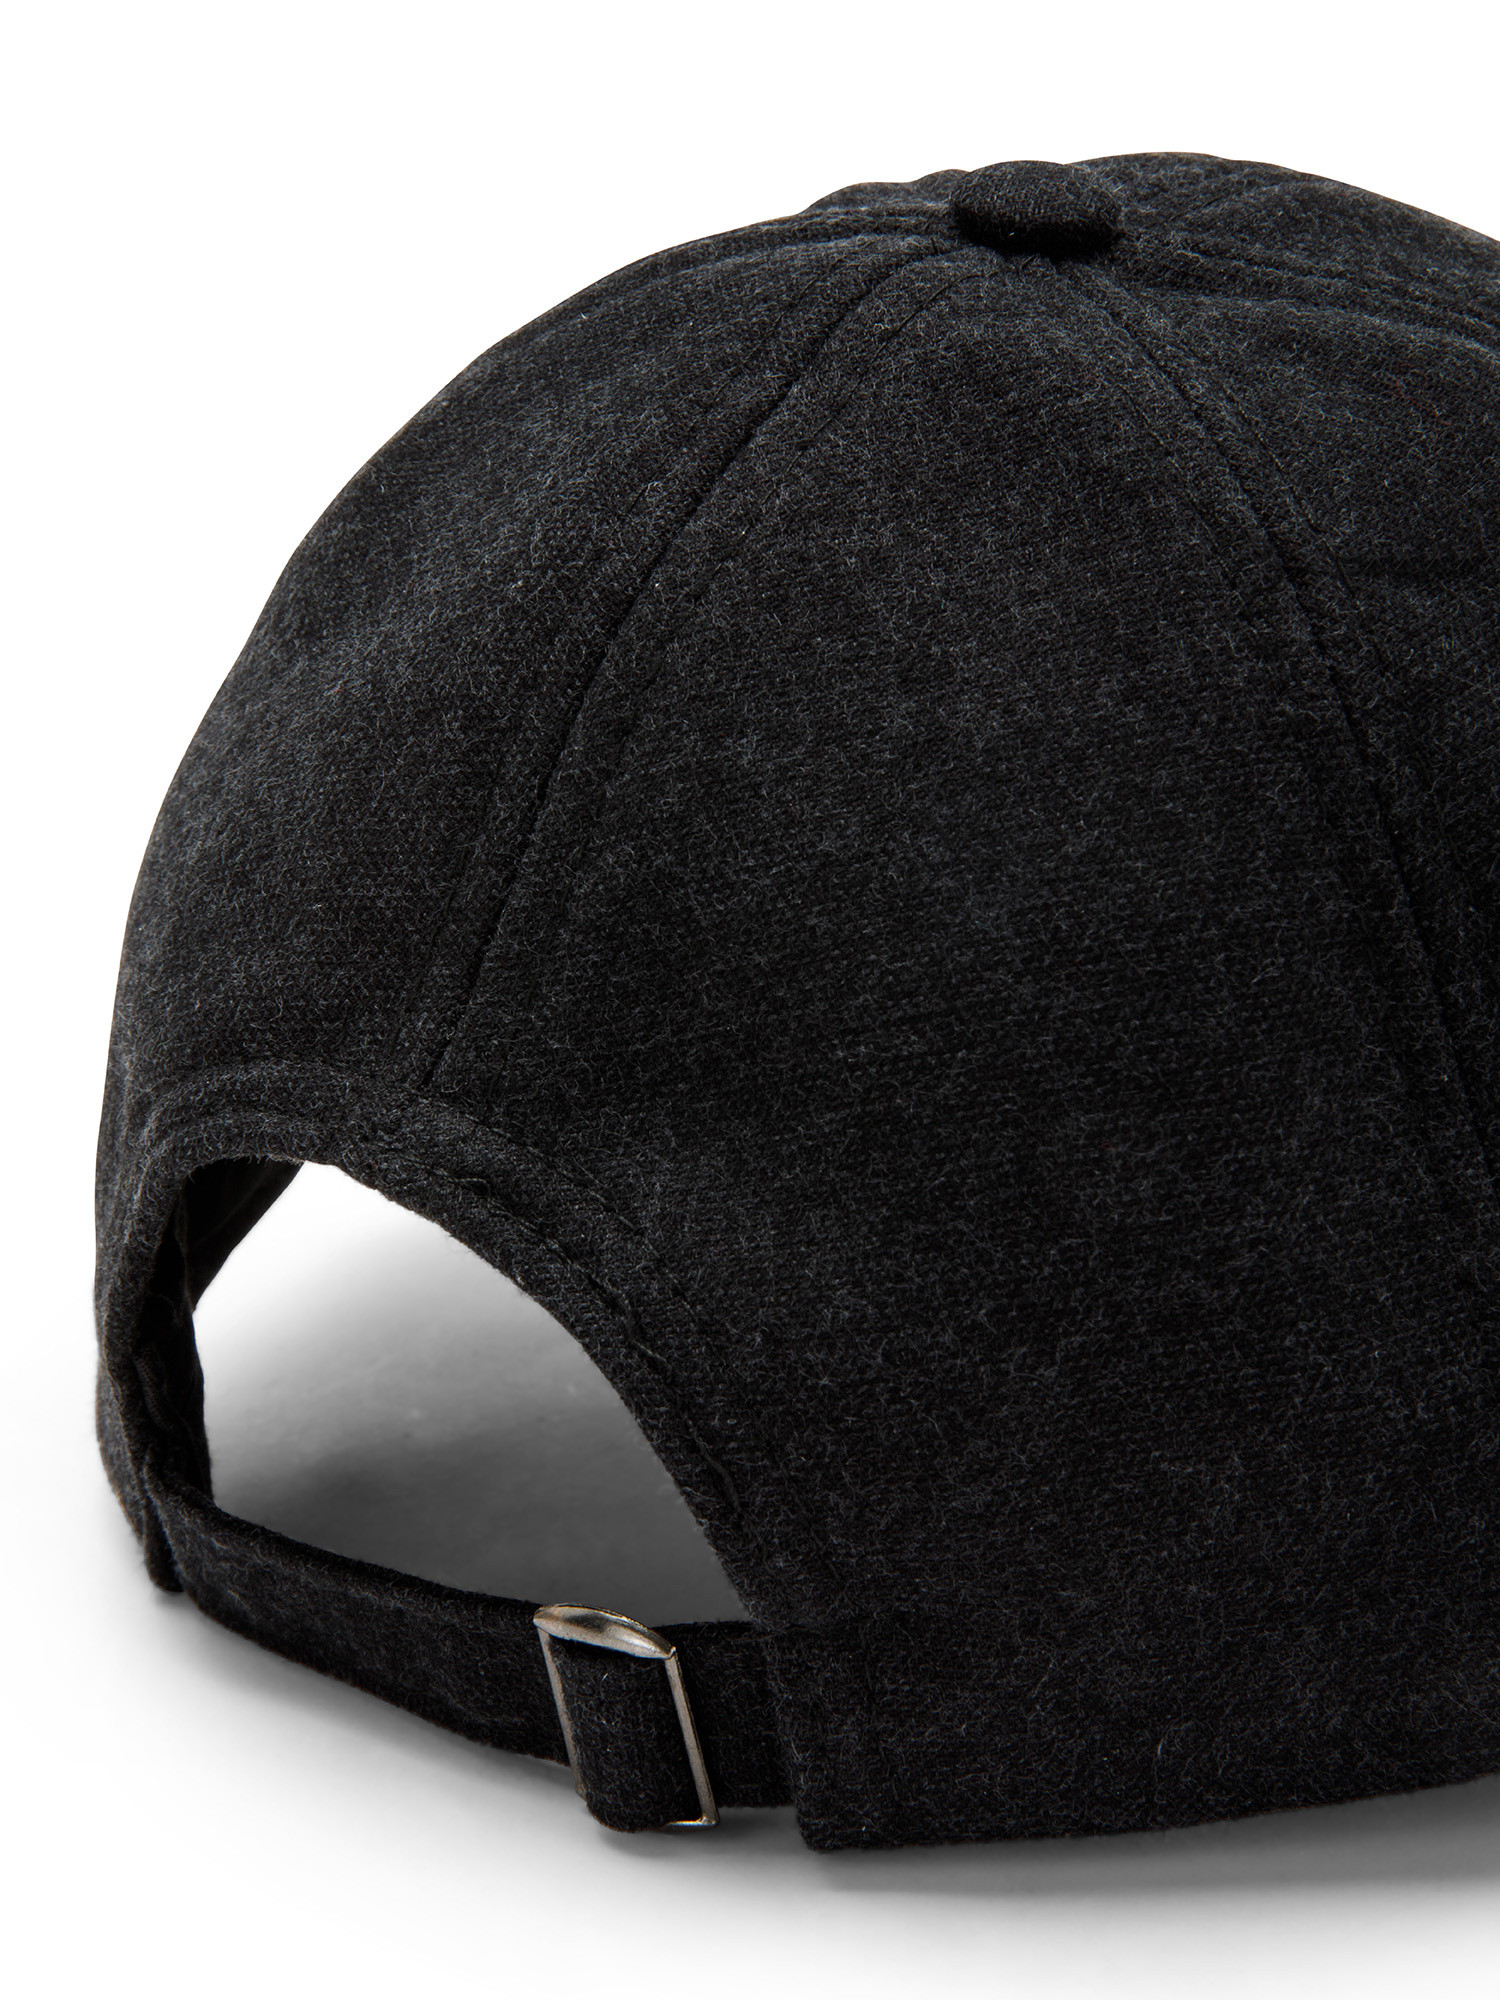 Luca D'Altieri - Baseball cap, Black, large image number 1